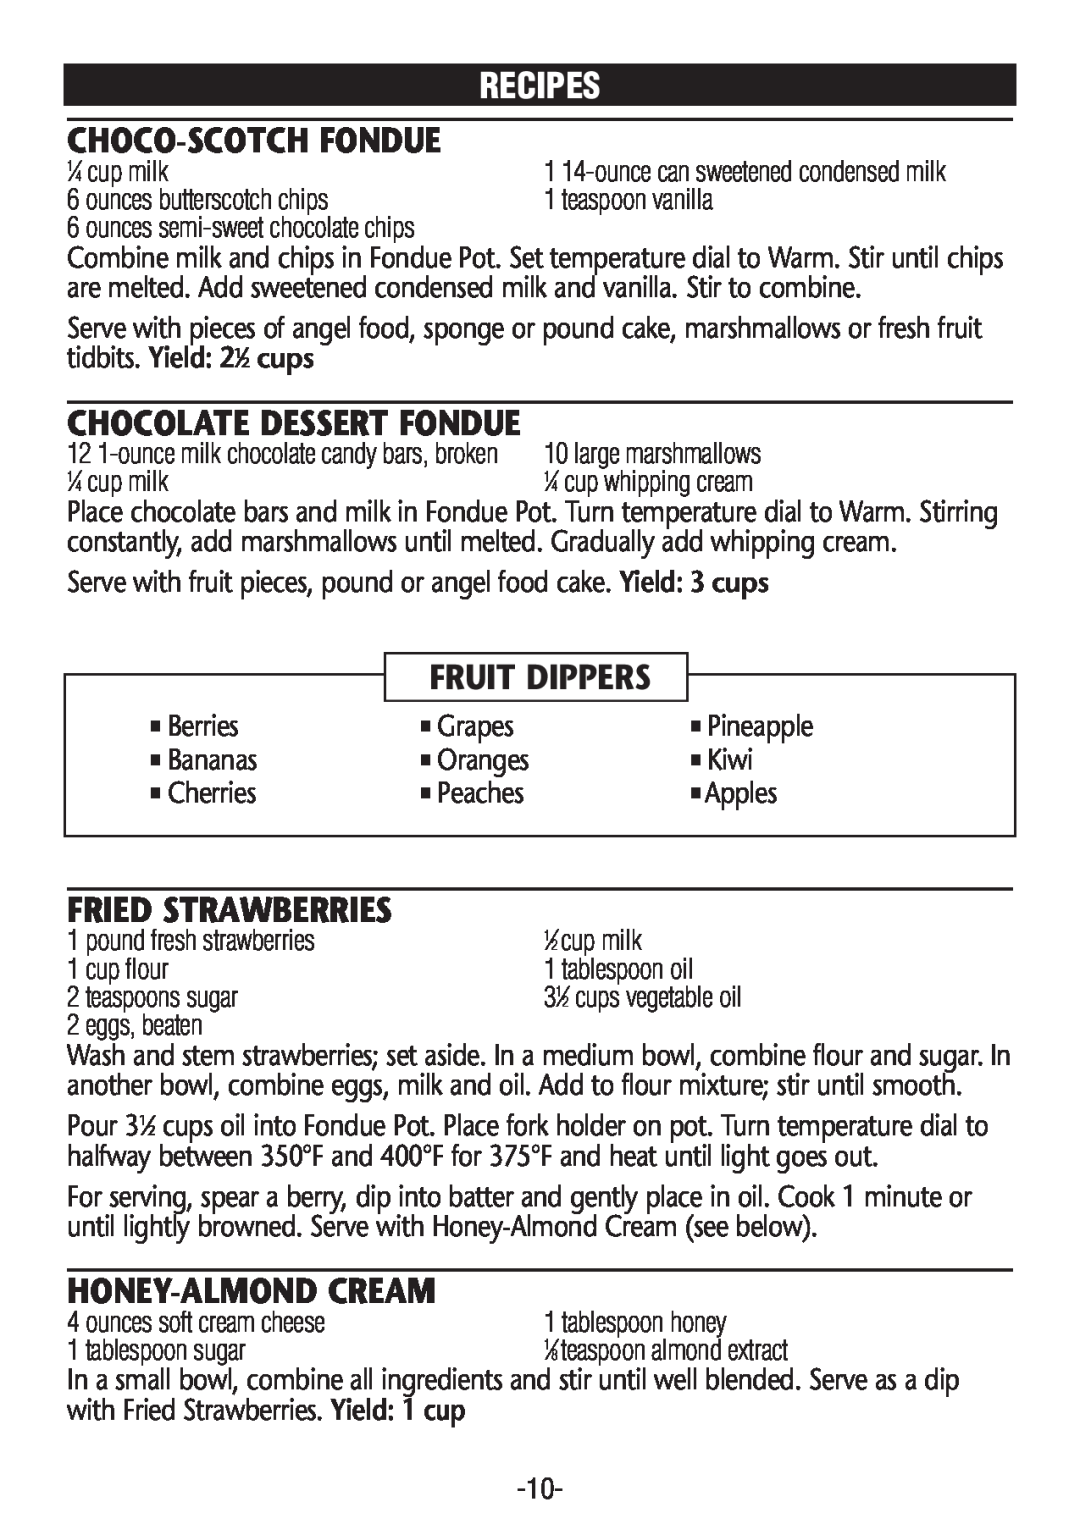 Rival FD350S CN manual Chocolate Dessert Fondue, Fruit Dippers, Fried Strawberries, Honey-Almondcream, Recipes 